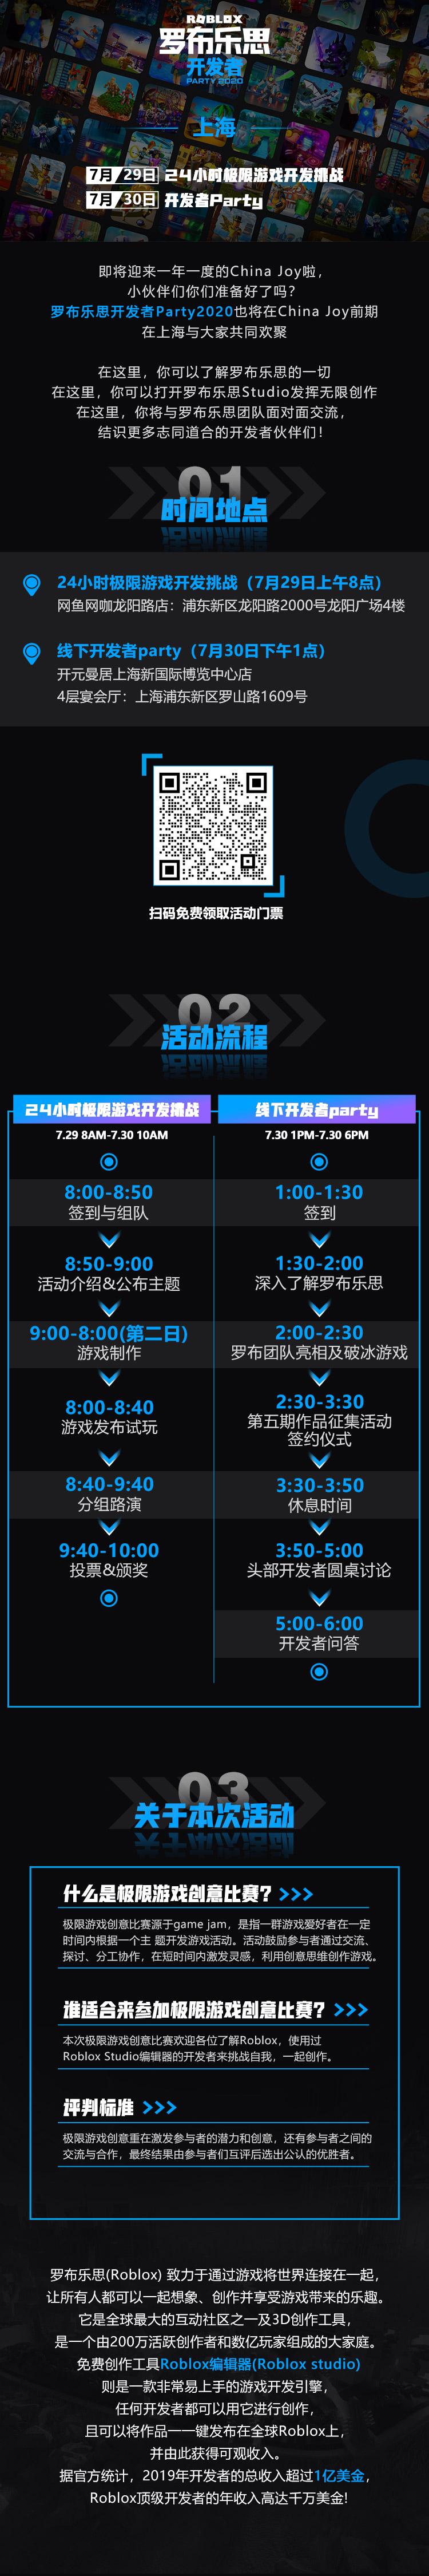 Chinajoy上海见，24小时极限游戏开发和开发者Party火热报名中